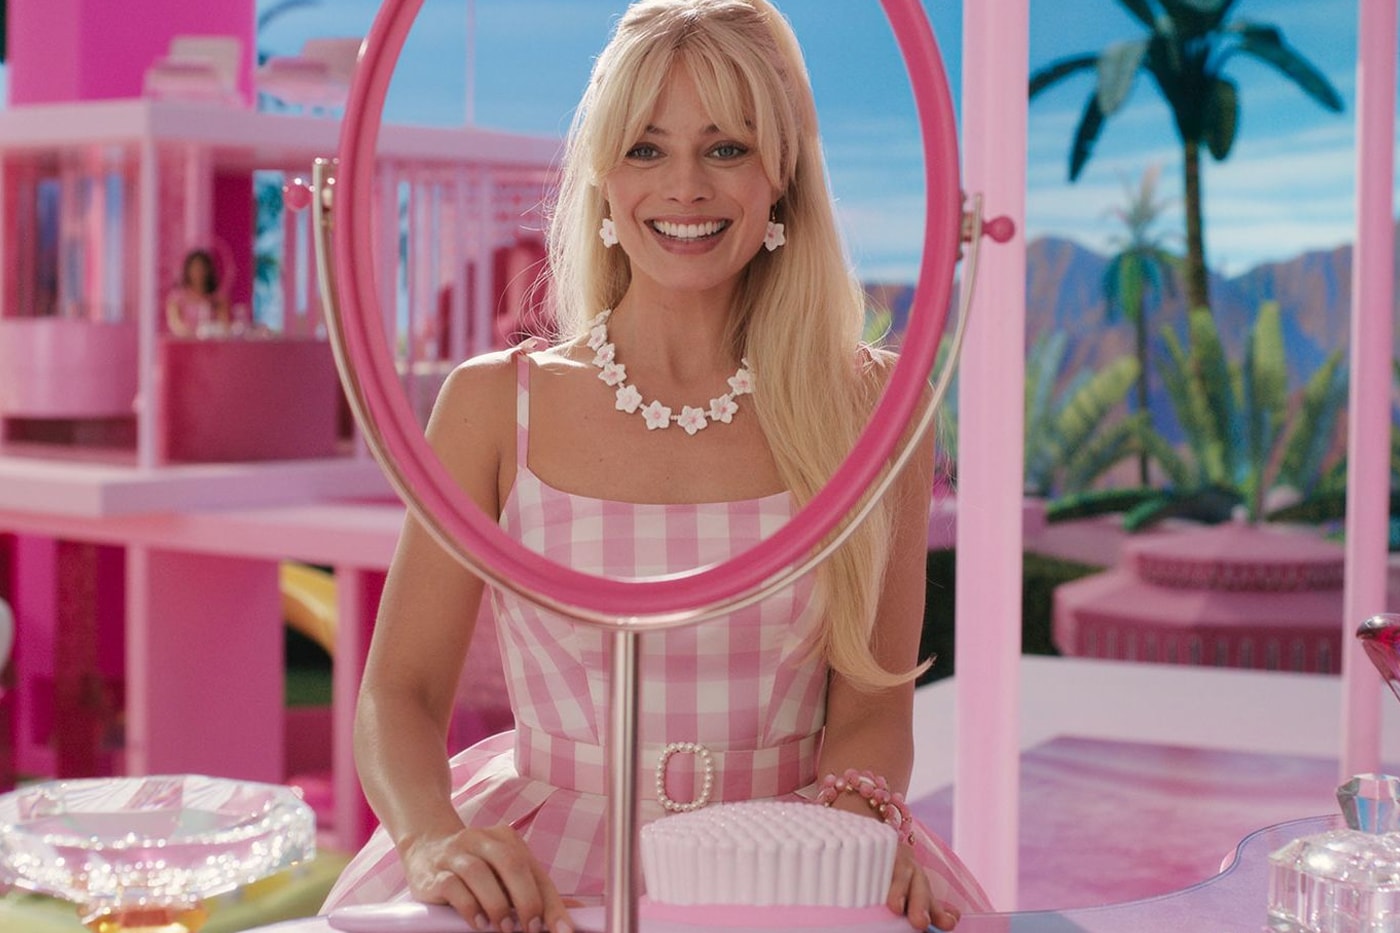 'Barbie' Movie Soundtrack Features Ice Spice, Tame Impala, Nicki Minaj and More